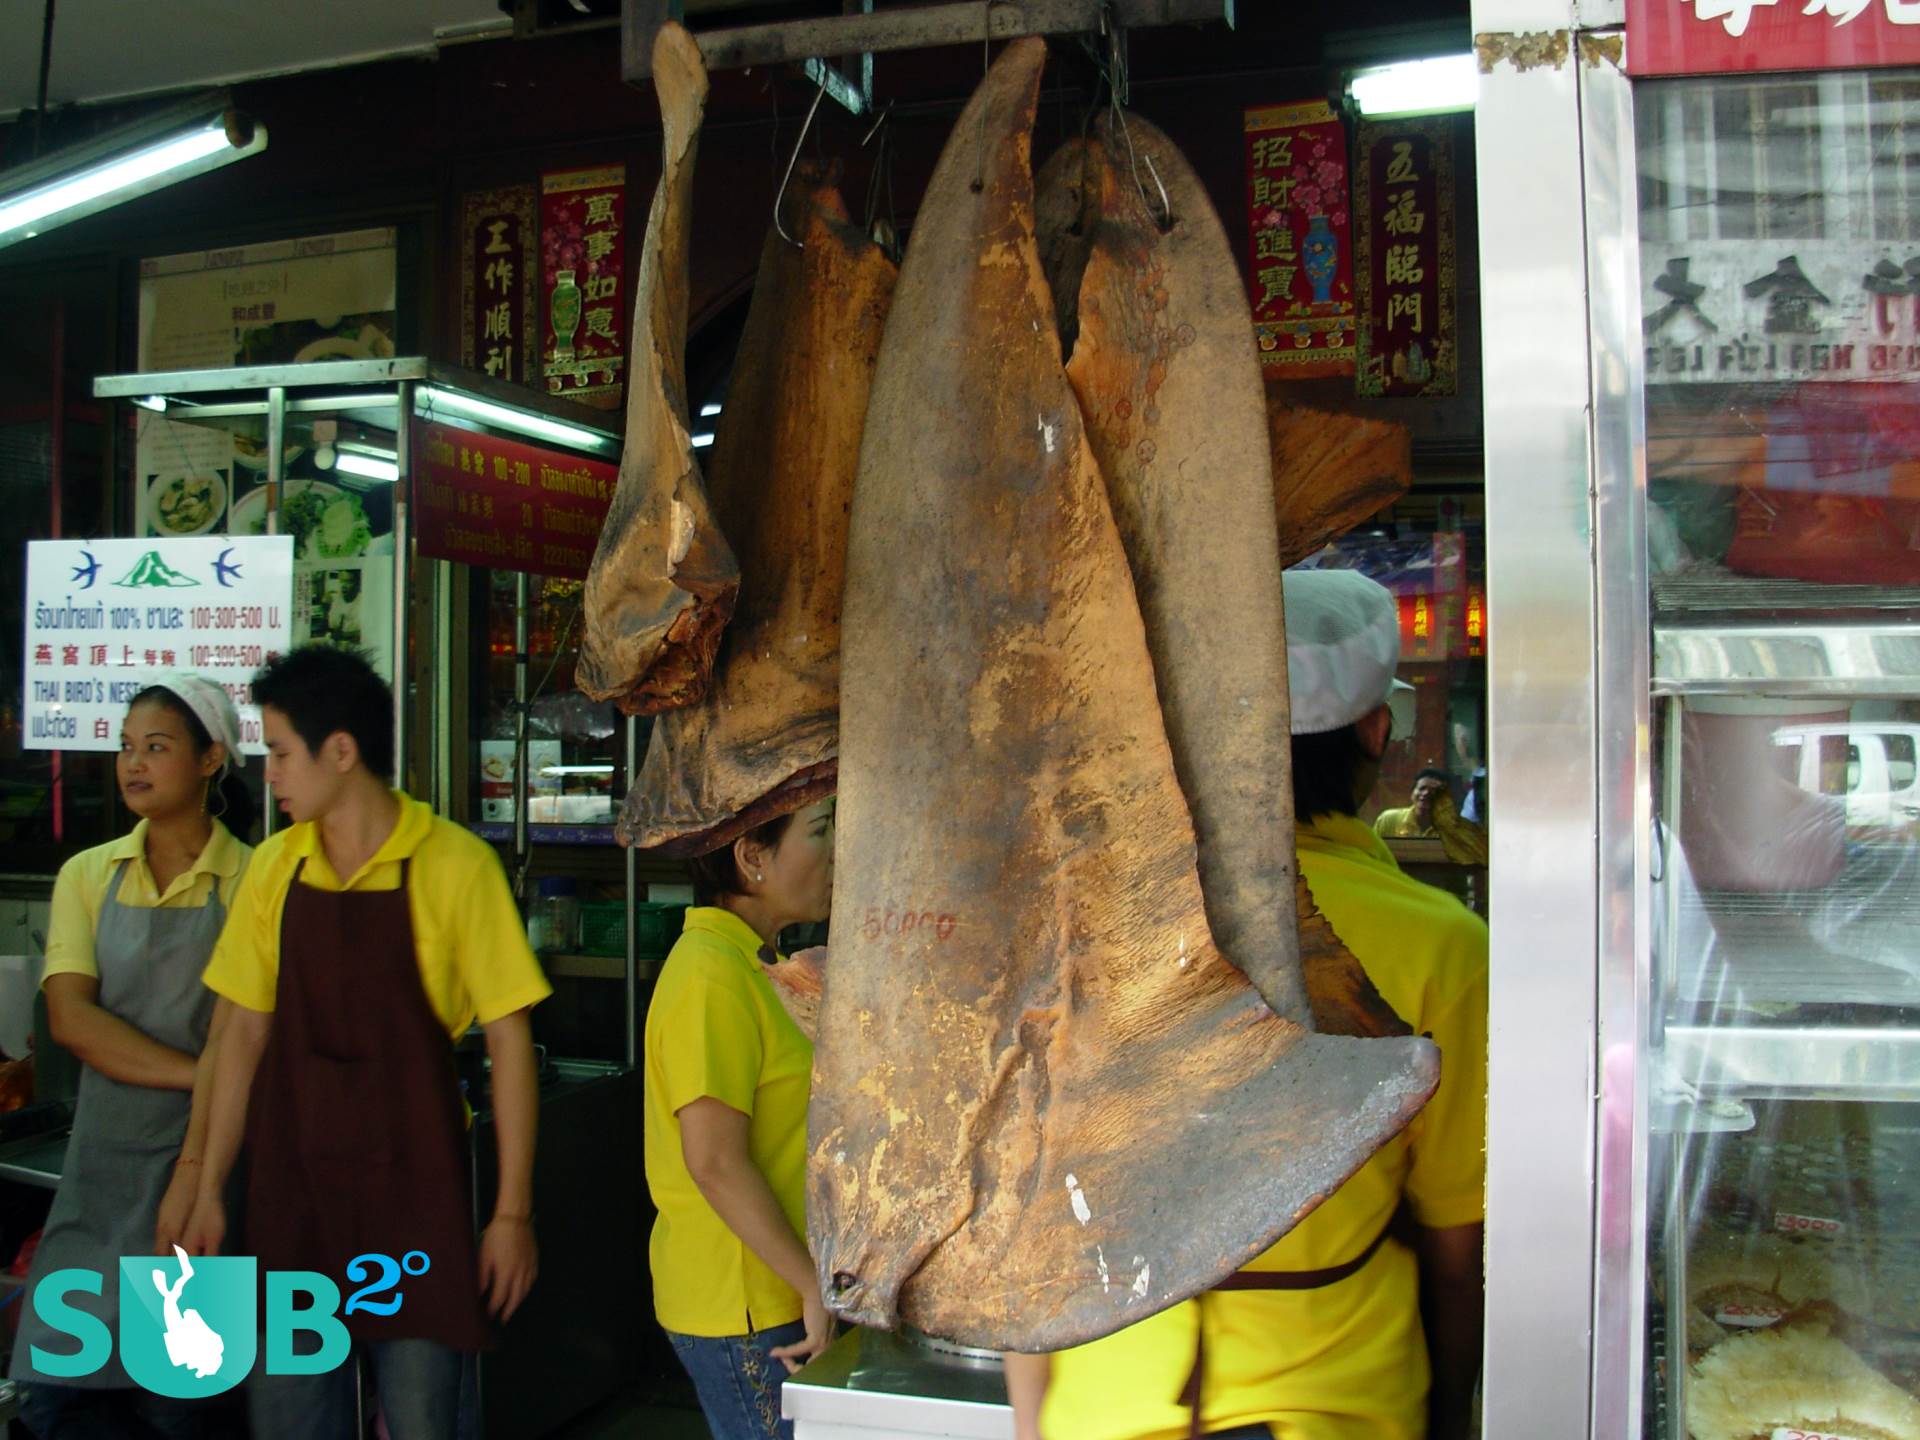 Shark fins sold in a Bangkok market, Thailand